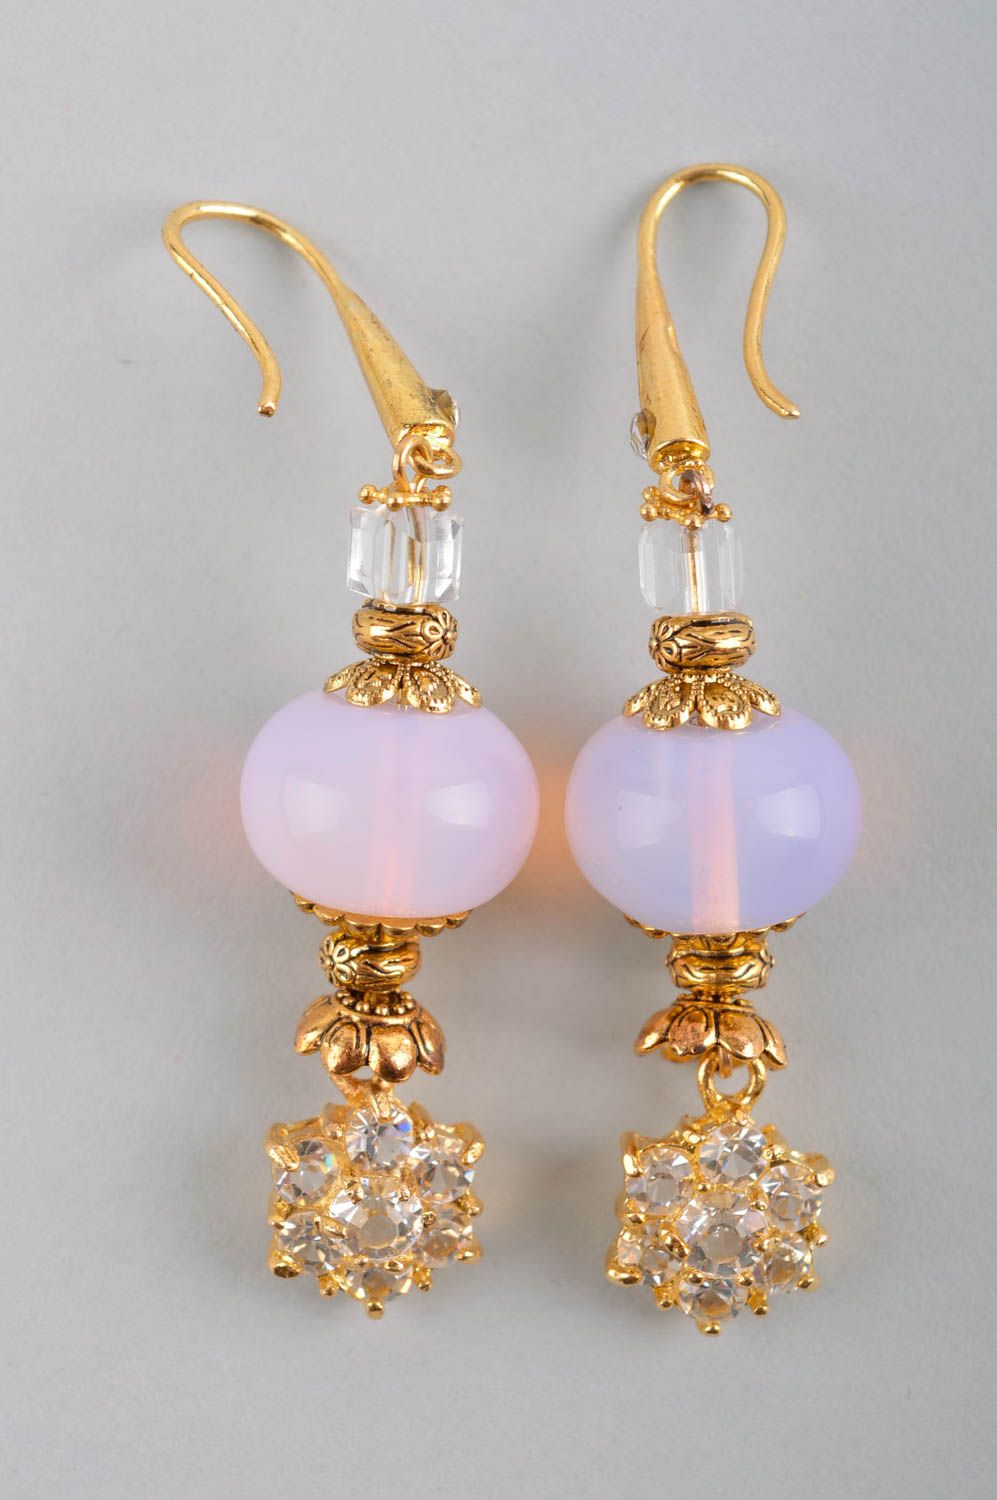 Handmade earrings designer jewelry handmade jewellery earrings for women photo 3